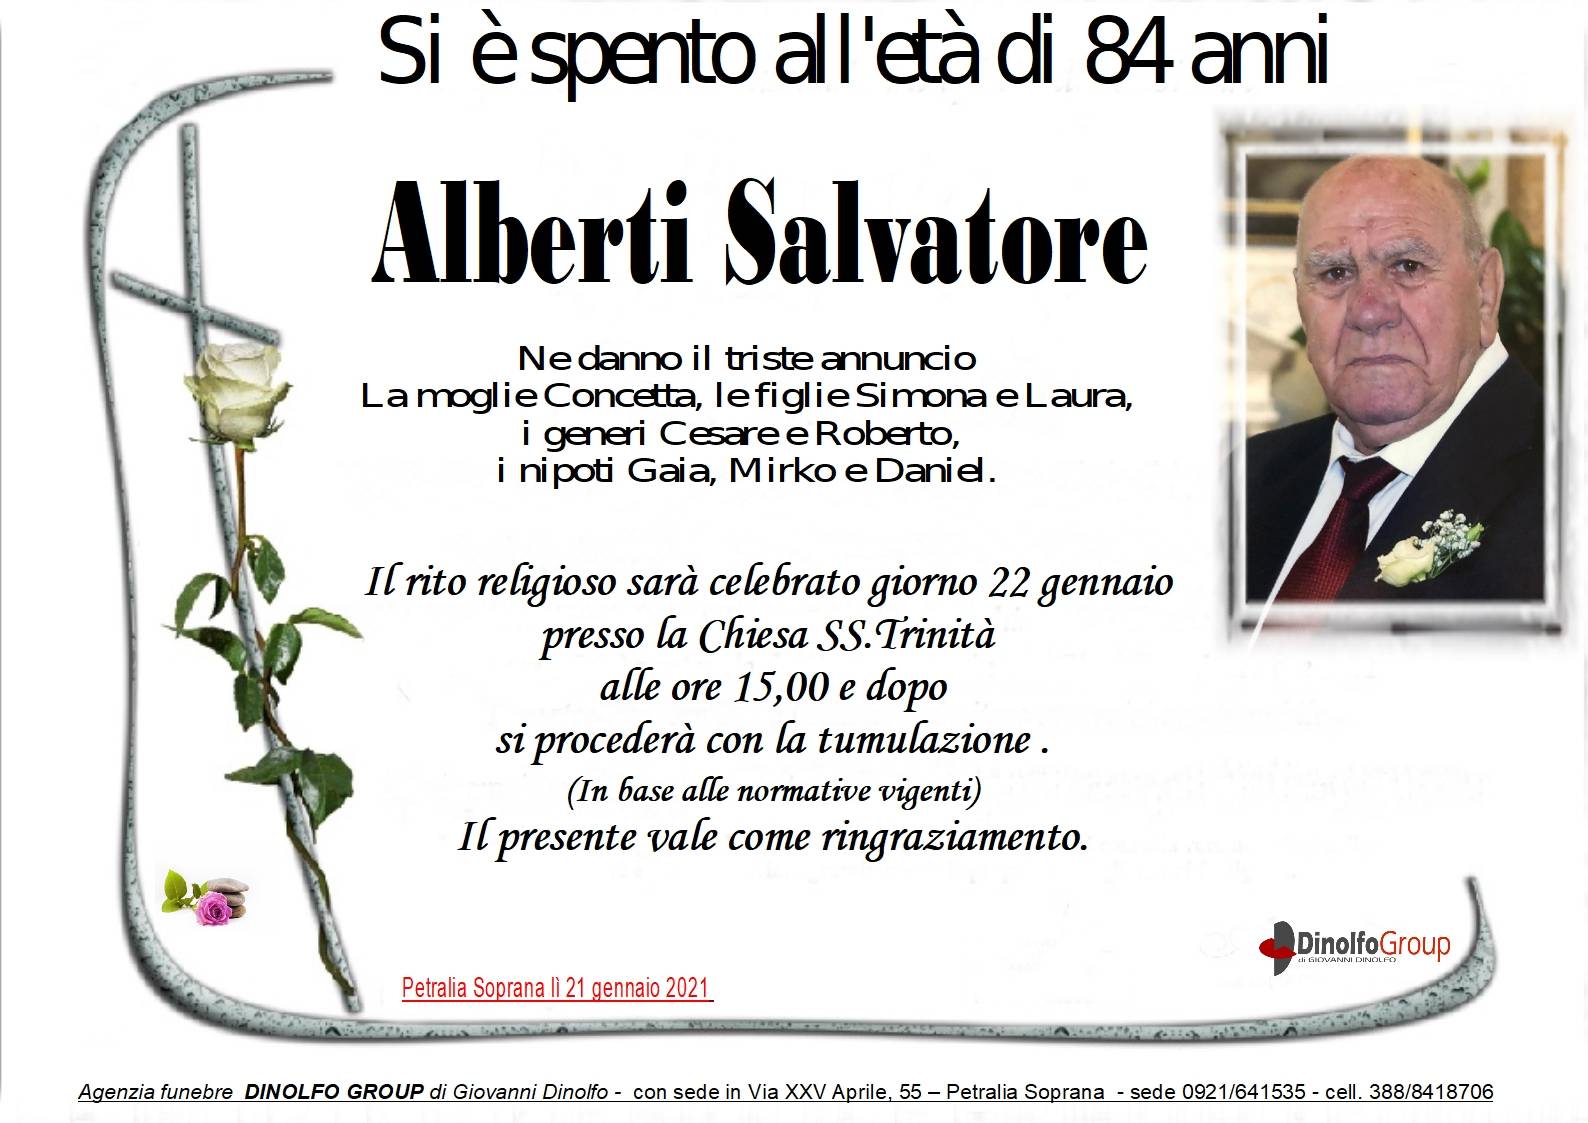 Salvatore Alberti